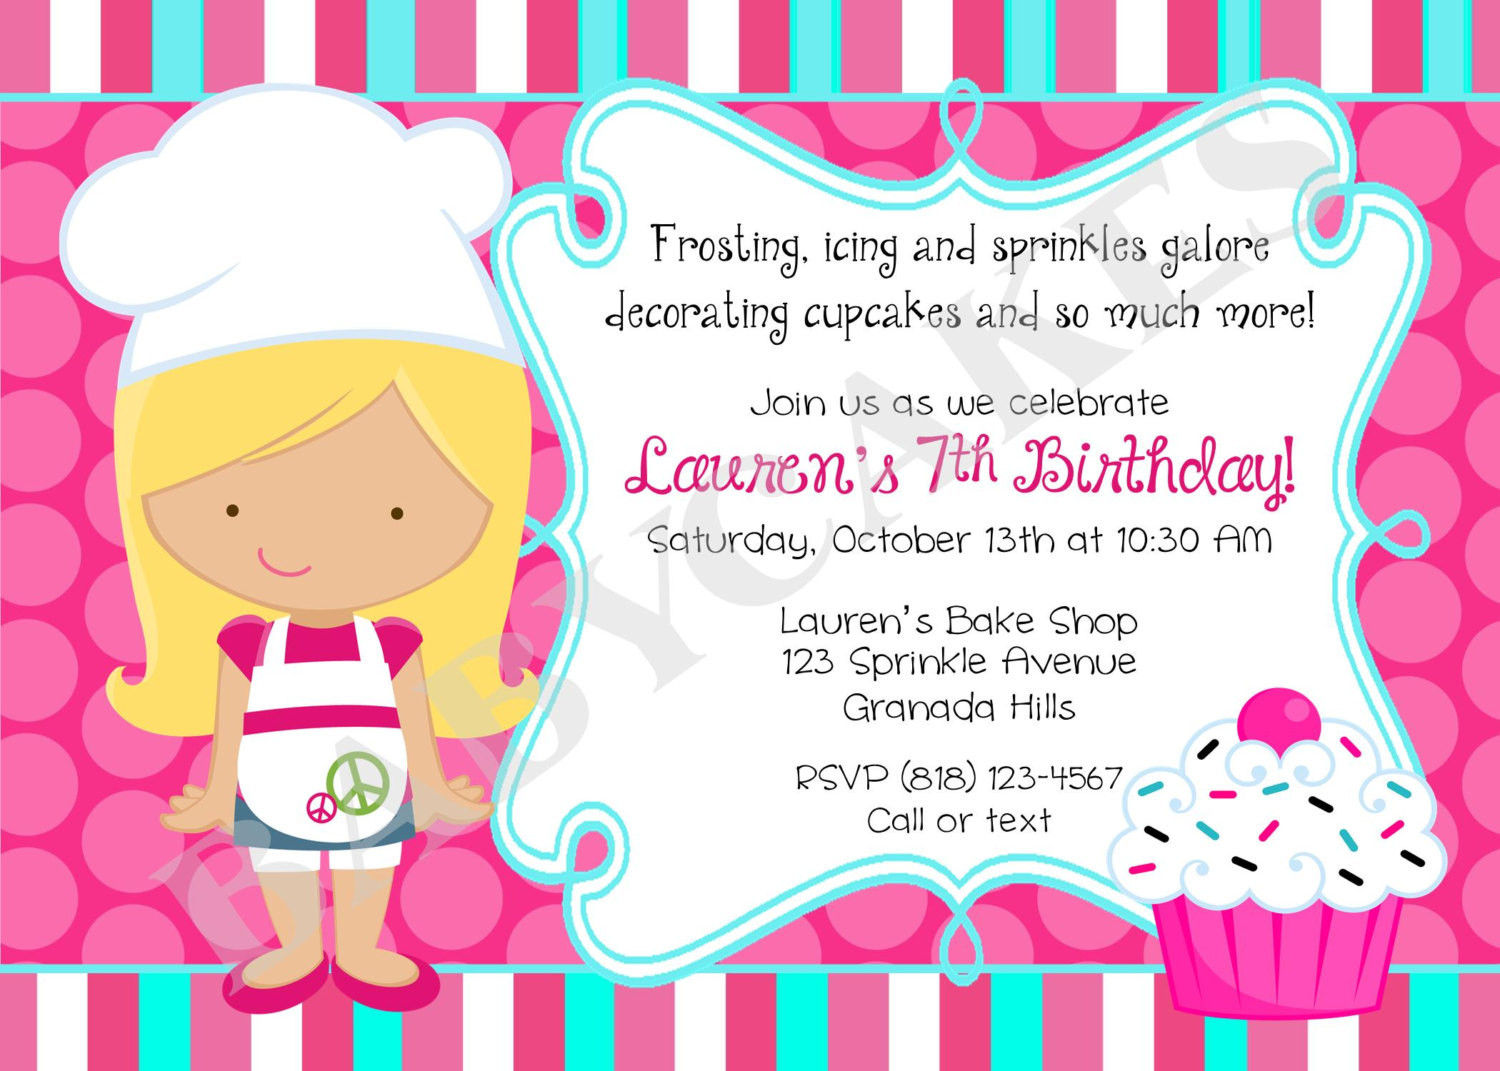 Cupcake Birthday Invitations
 Cupcake Decorating birthday Party Invitation by